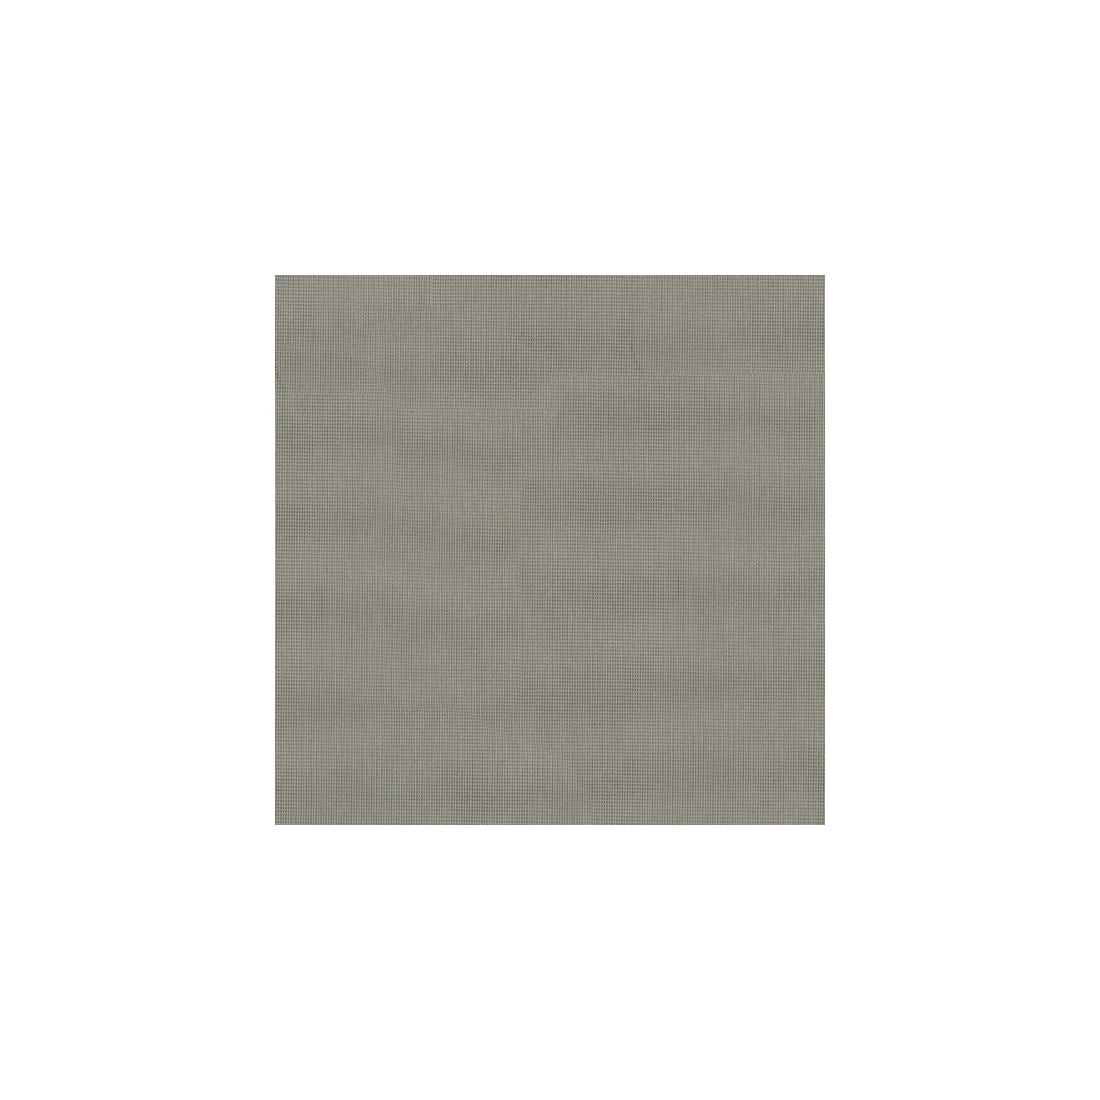 Kravet Basics fabric in 3705-11 color - pattern 3705.11.0 - by Kravet Basics in the Gis collection